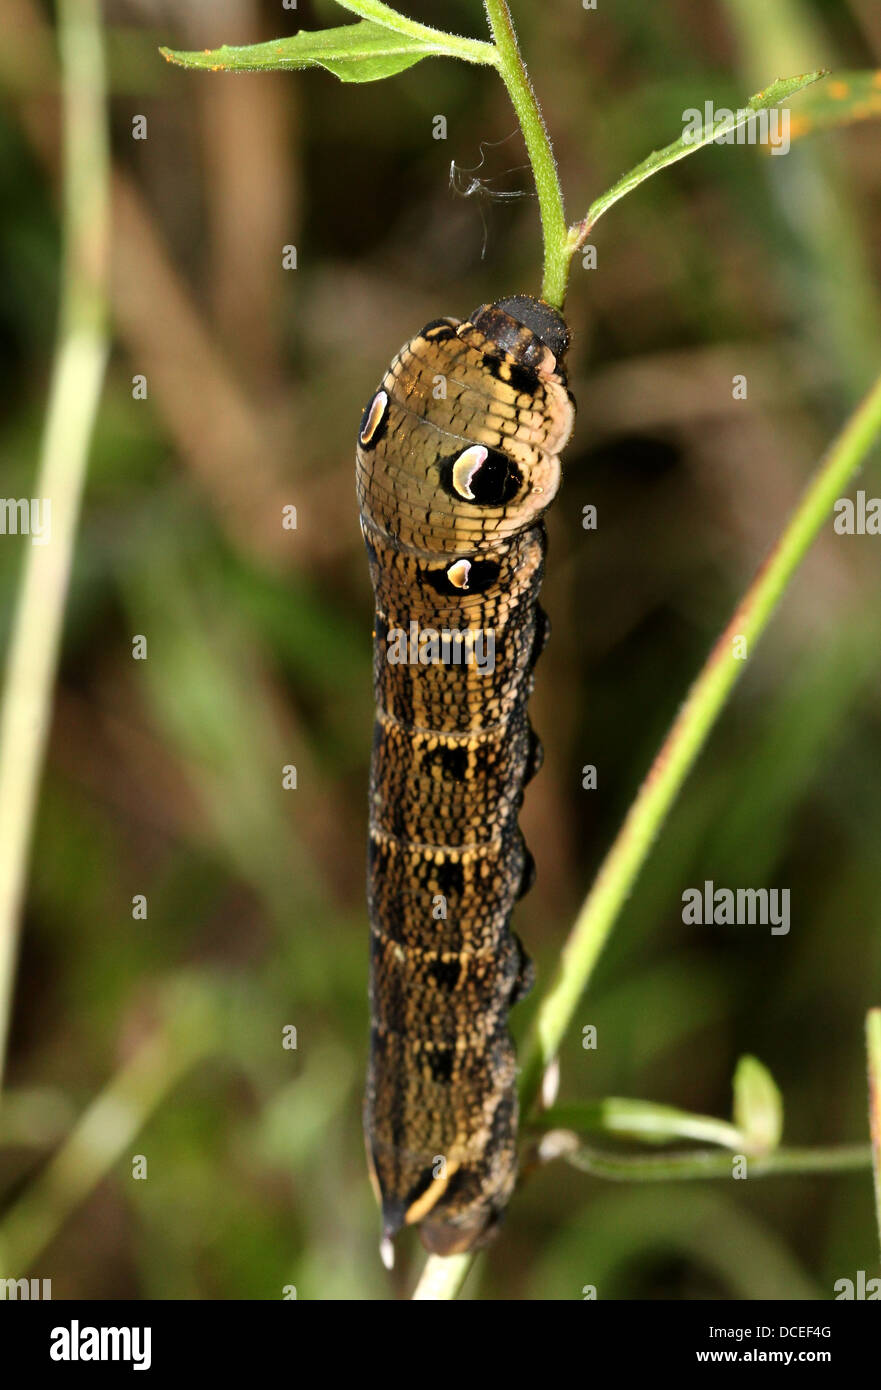 Detailed series of close-ups of the caterpillar of the Elephant Hawk-moth (Deilephila elpenor), feeding & posing Stock Photo